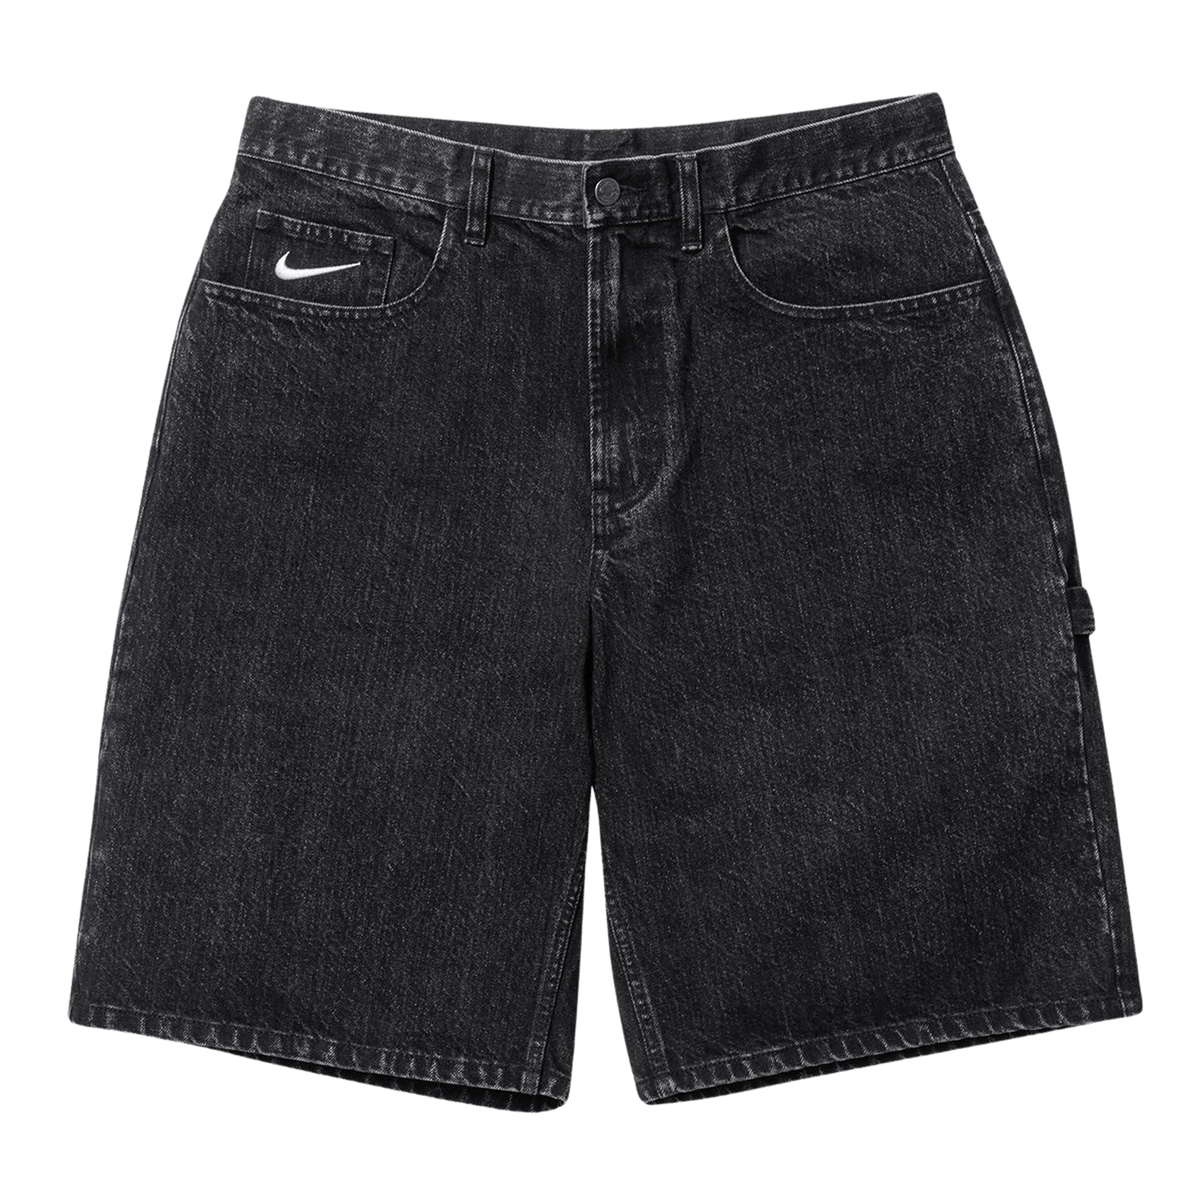 Supreme x Nike Denim Shorts 'Black' - Kick Game